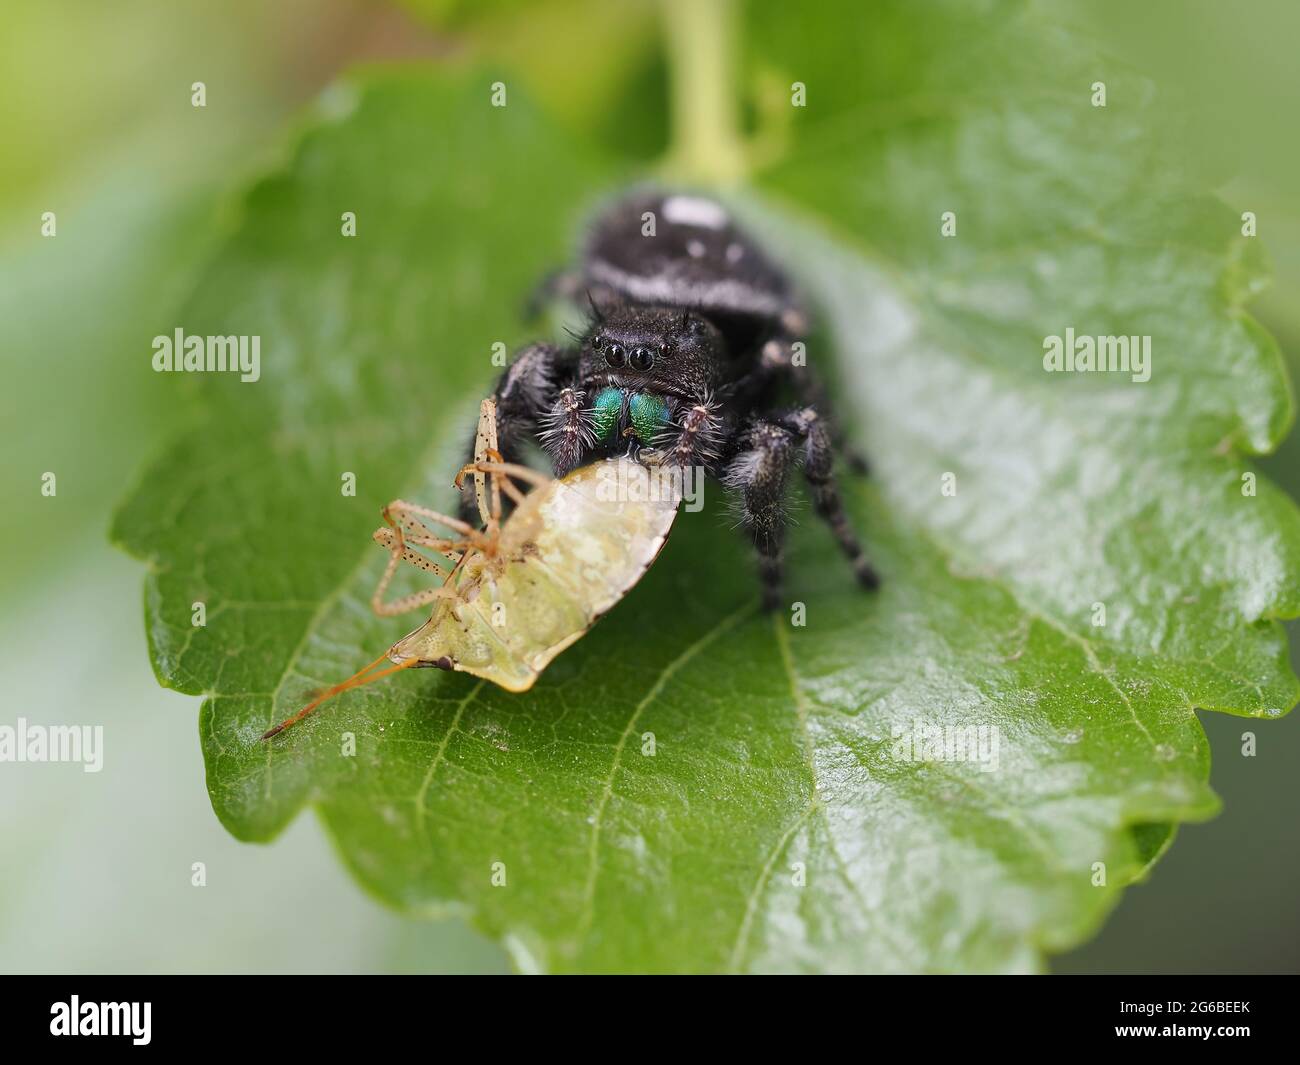 Phidippus audax (bold jumping spider) with prey (stinkbug) Stock Photo